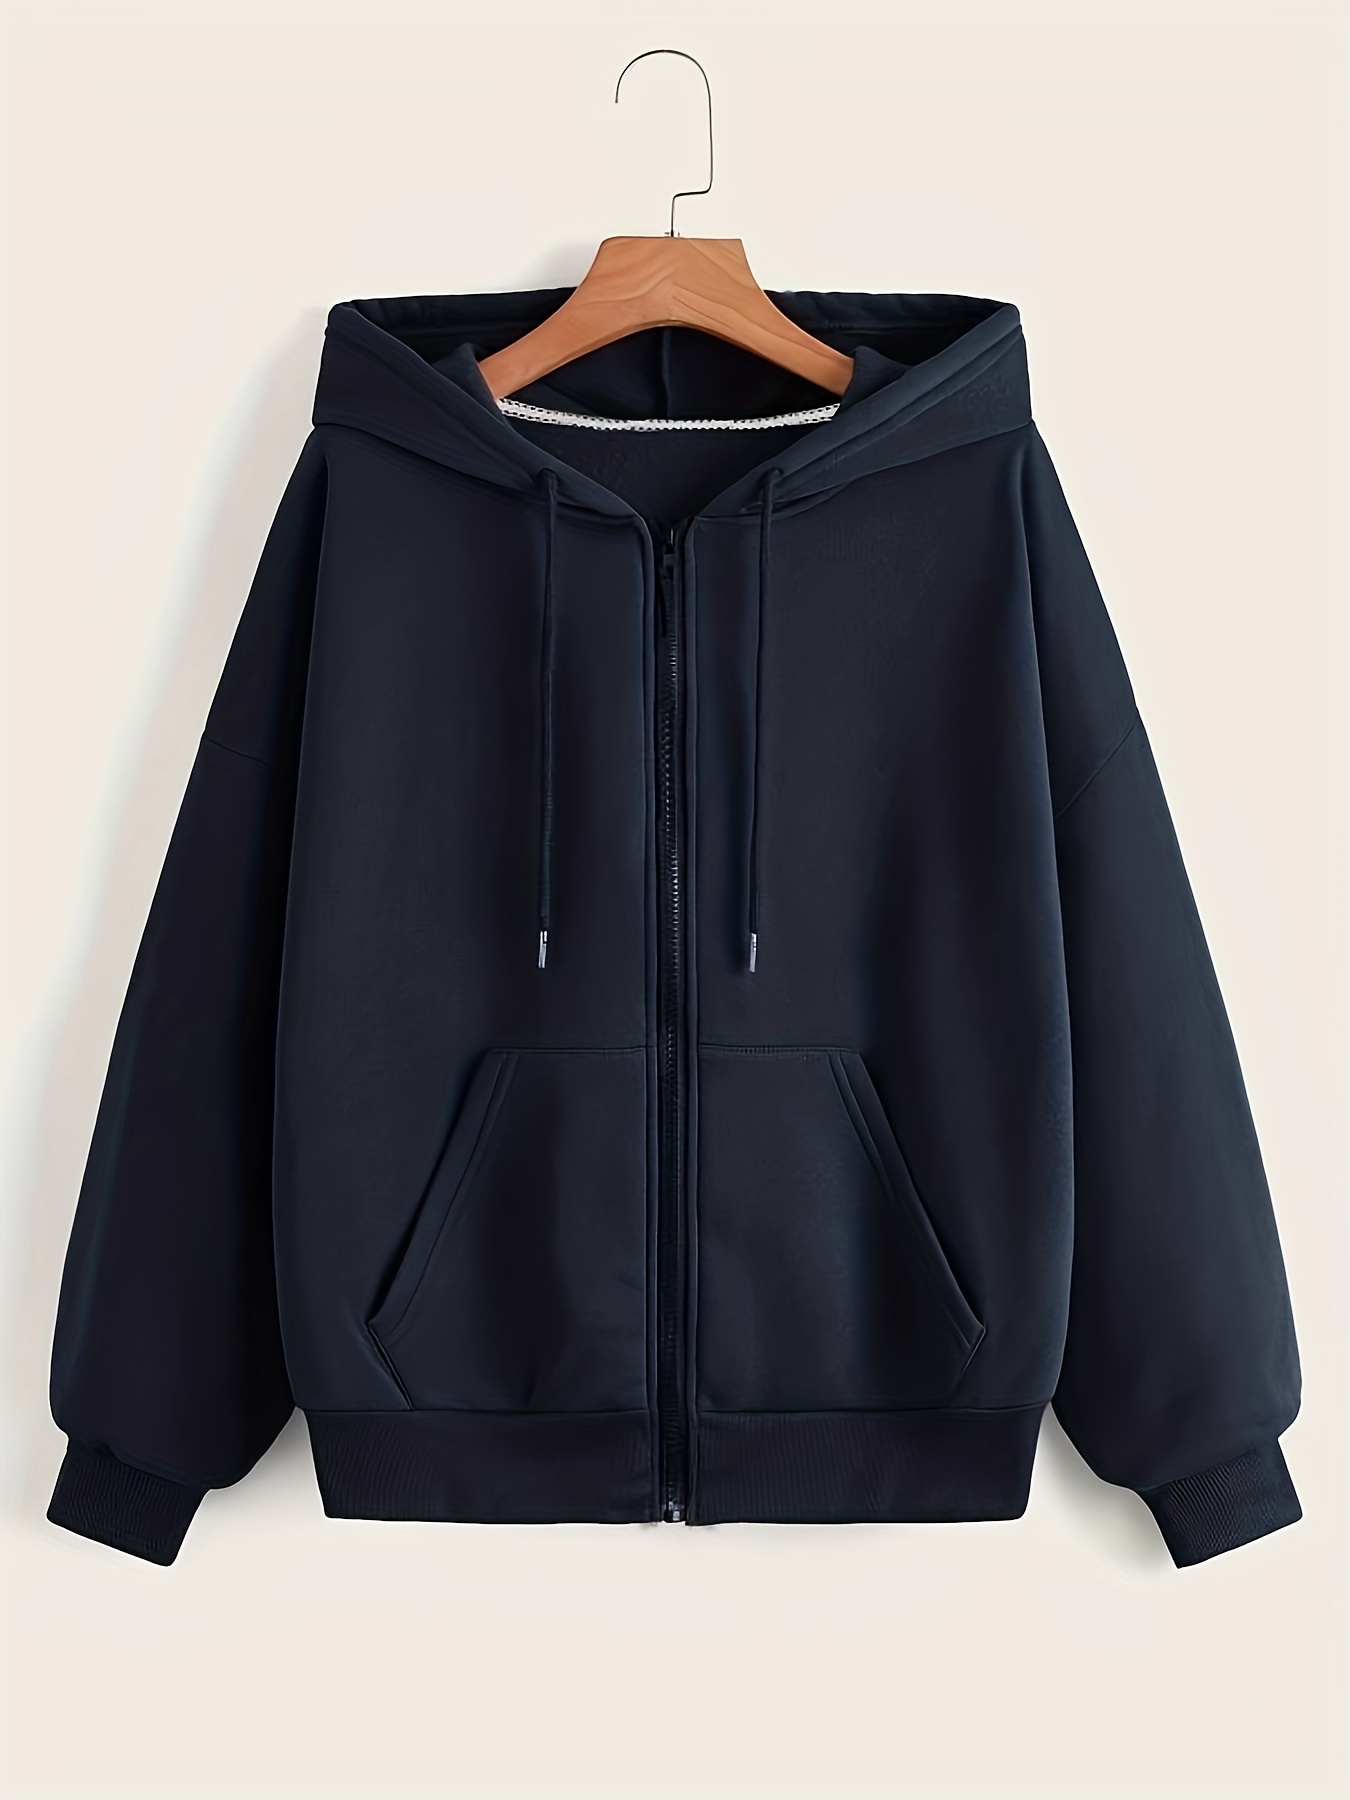  Fleece Hoodies for Women Solid Color Thick Sweatshirt Lined  Winter Long Sleeve Pullovers Soft Warm Sweatshirt Pocket Black : Sports &  Outdoors